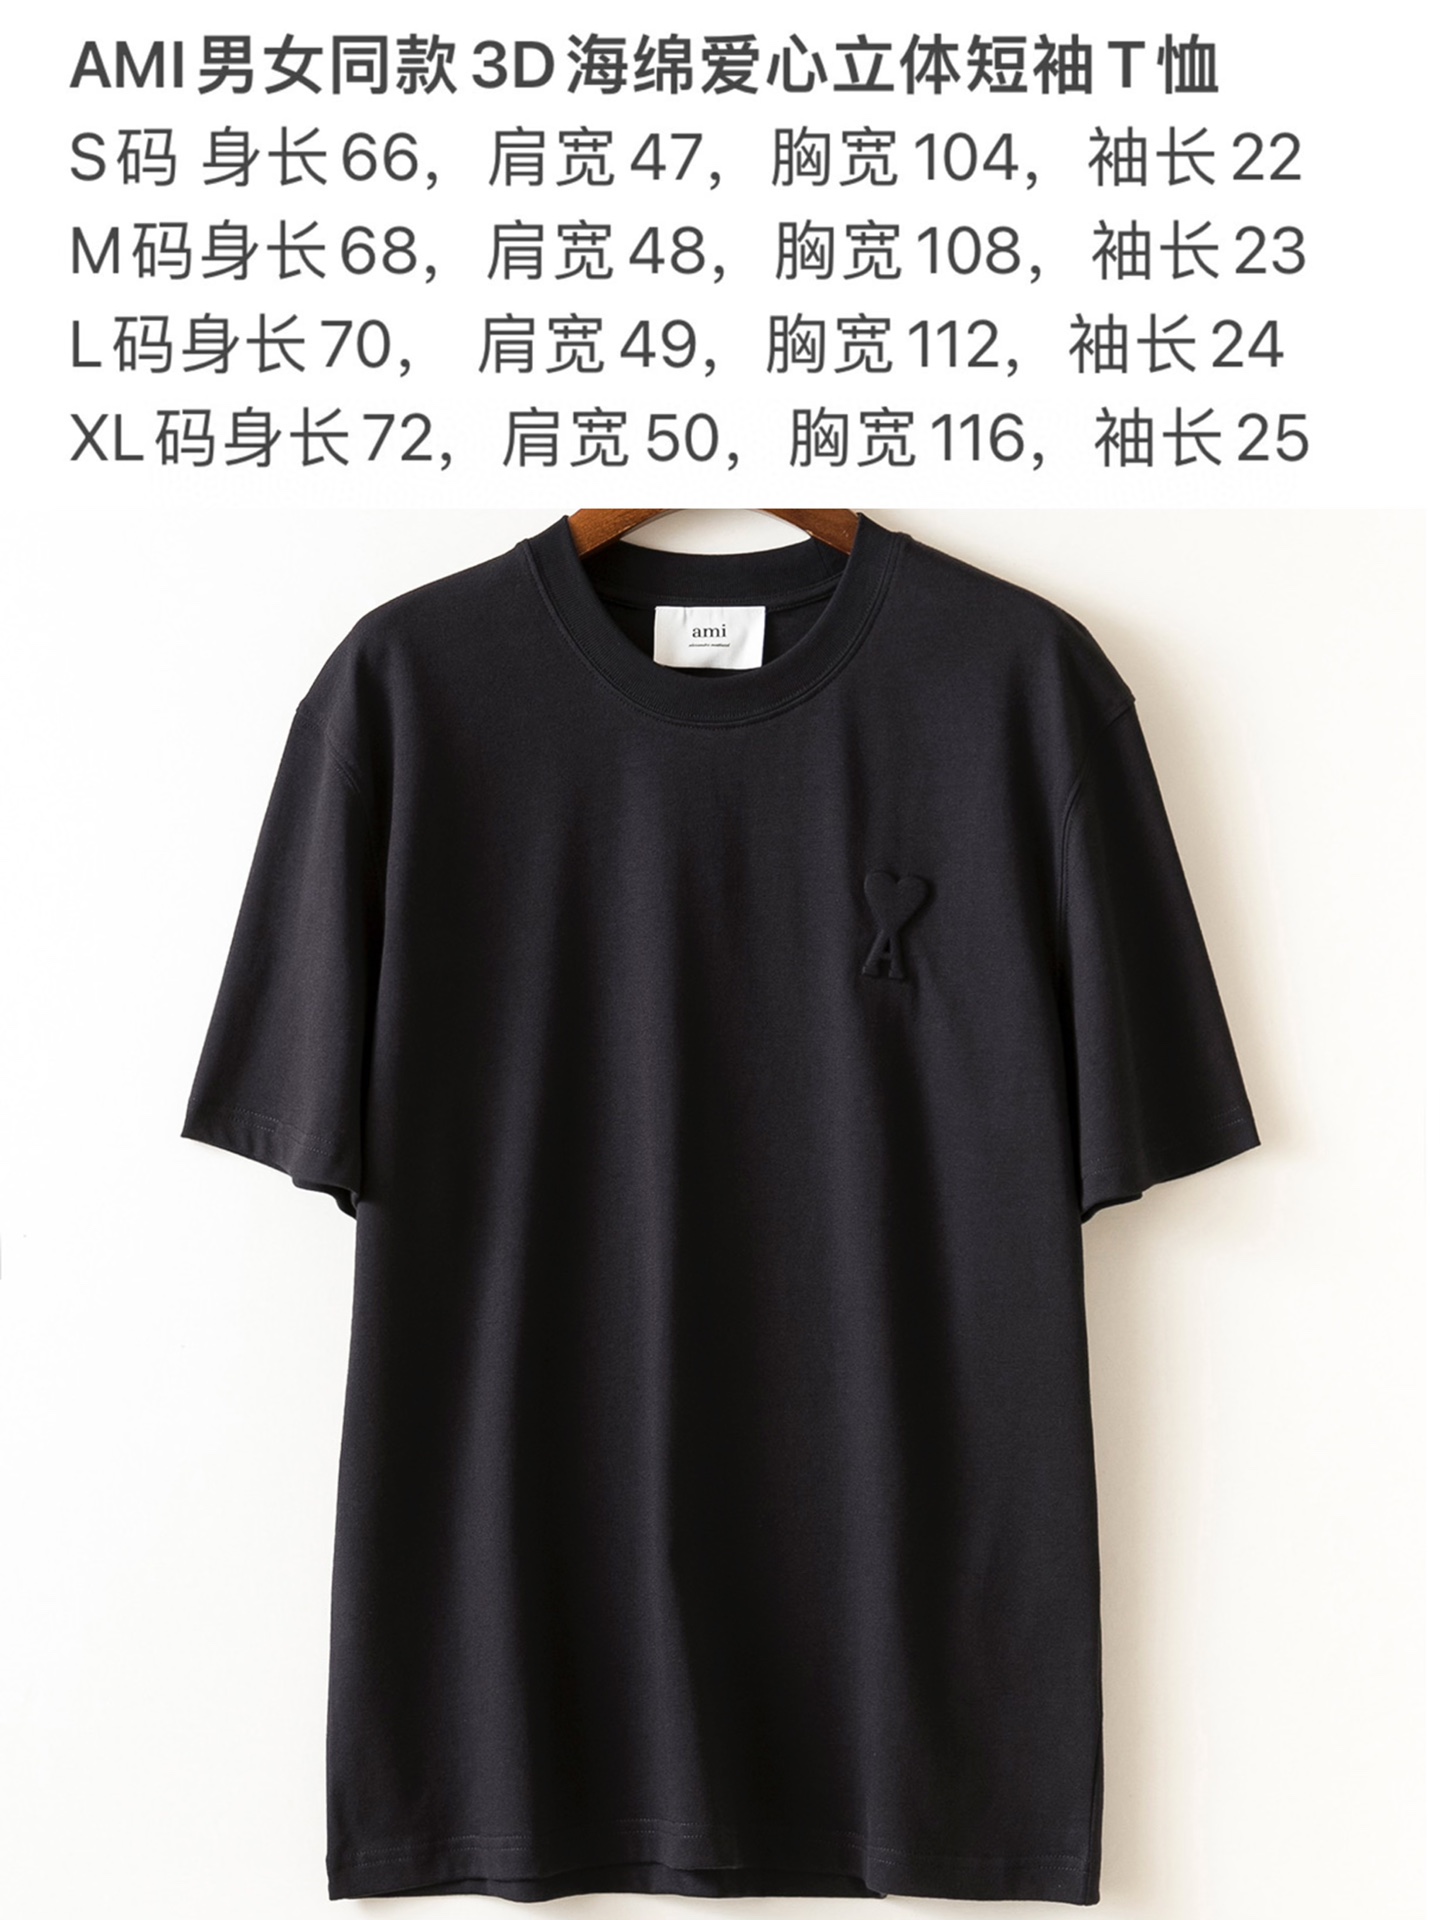 Ami春夏新品，3D立体海绵“爱心”短袖圆领T恤。法国时尚品牌Ami，年年最火的潮牌之一。现如今是各大名星博主的心头挚爱，简约个性的设计风格。干净简约。日常通勤上班都很合适。Oversize宽松版型设计。面料冰冰凉凉的上身超级舒服。颜色：黑色；码数：S/M/L/XL